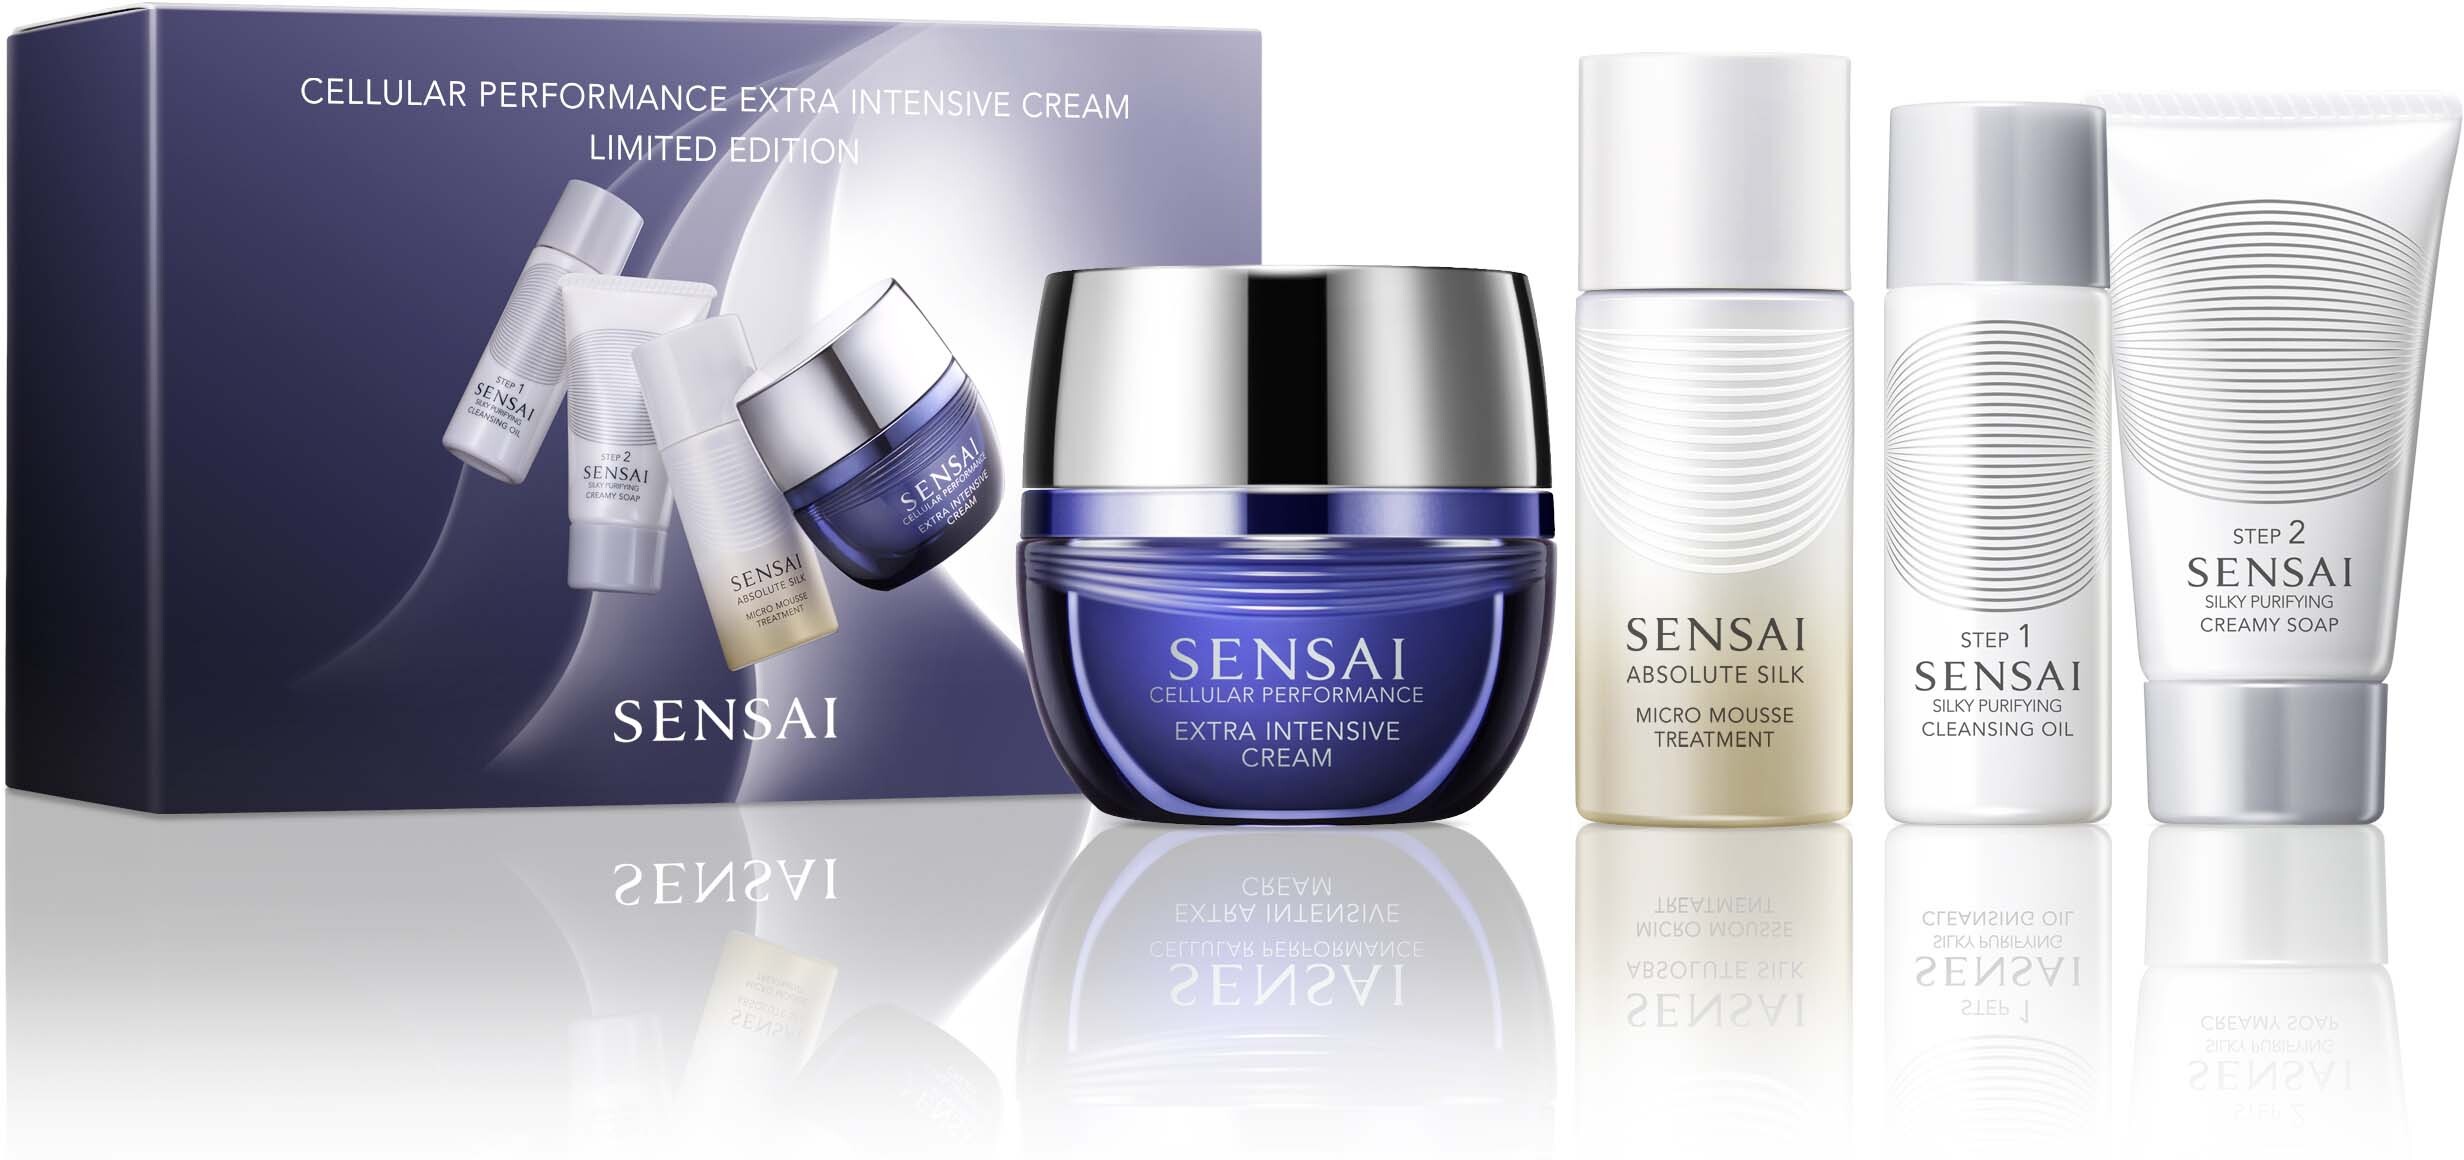 Sensai Cellular Performance Extra Intensive Cream Limited Edition